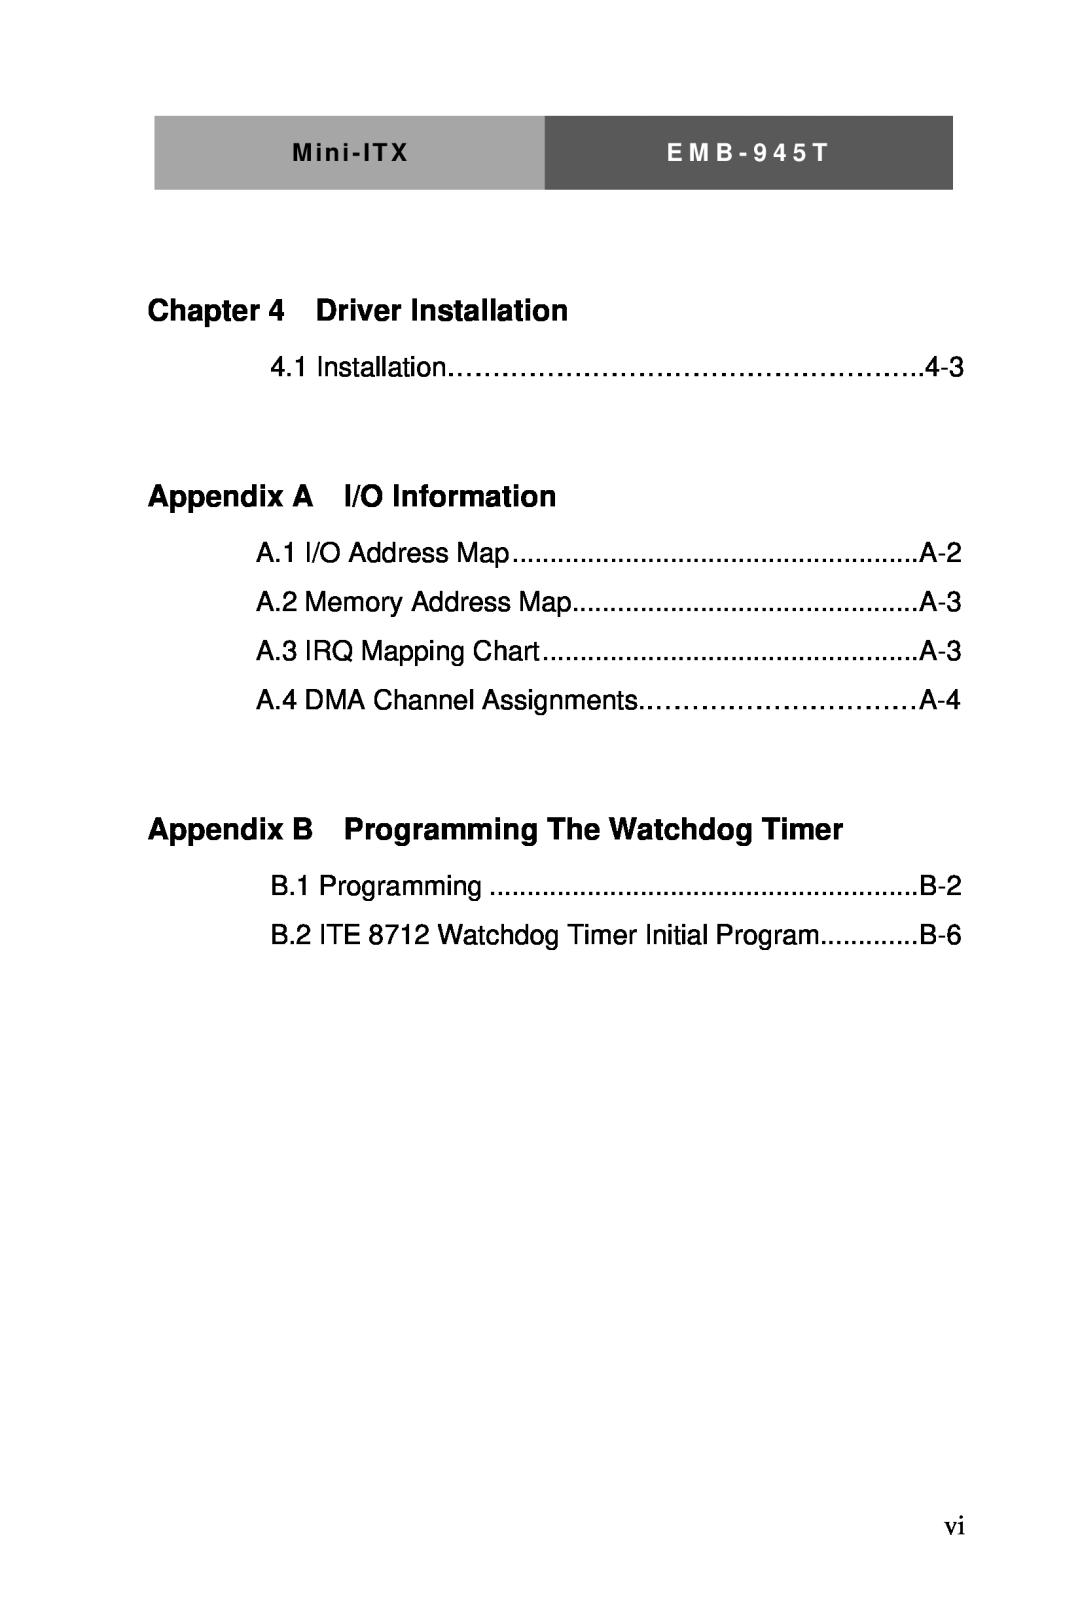 Intel EMB-945T manual Chapter, Driver Installation, Appendix A, I/O Information, Appendix B Programming The Watchdog Timer 